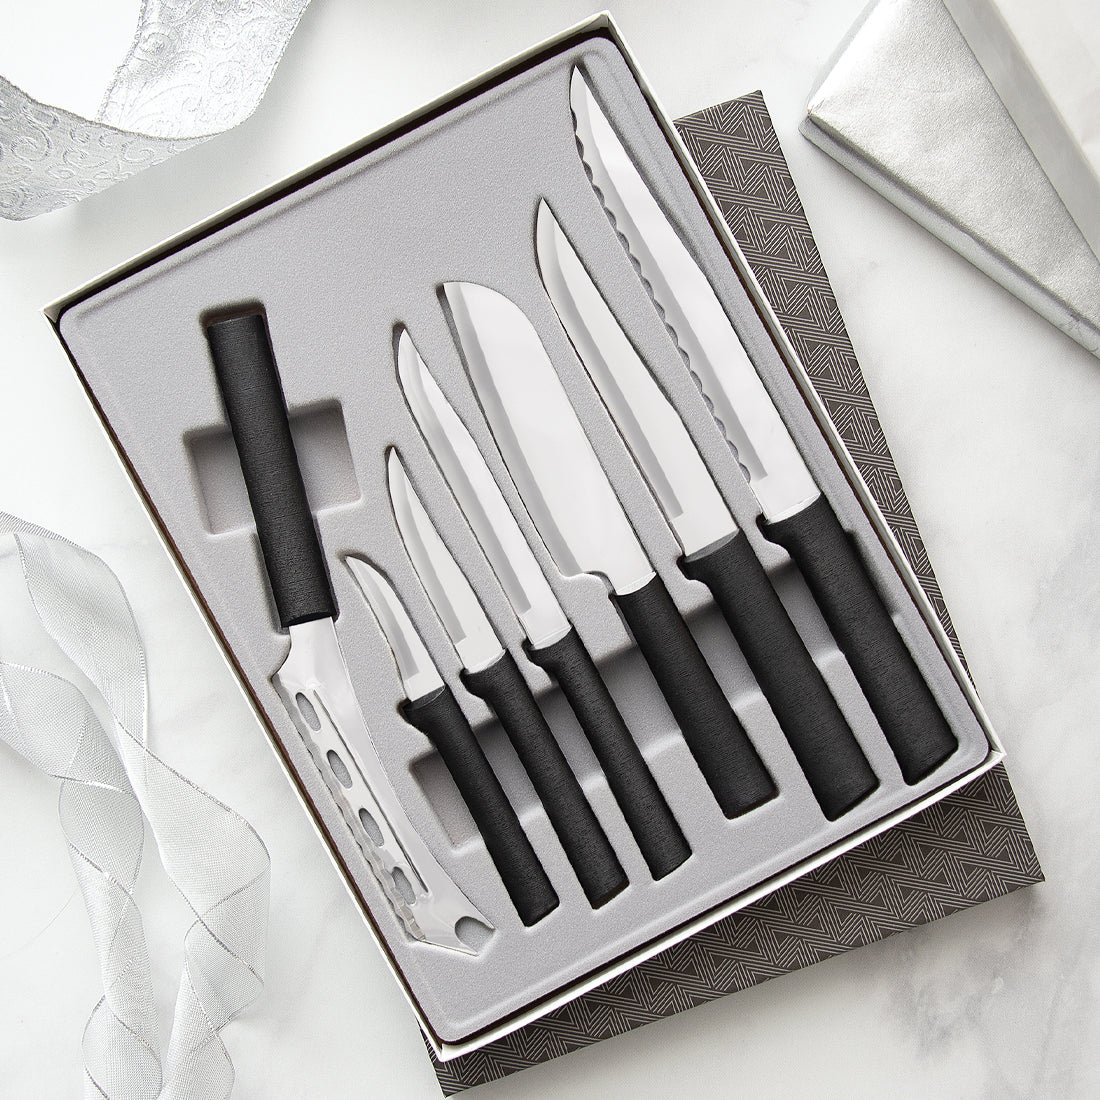 Rada Cutlery Starter Knives Gift Set